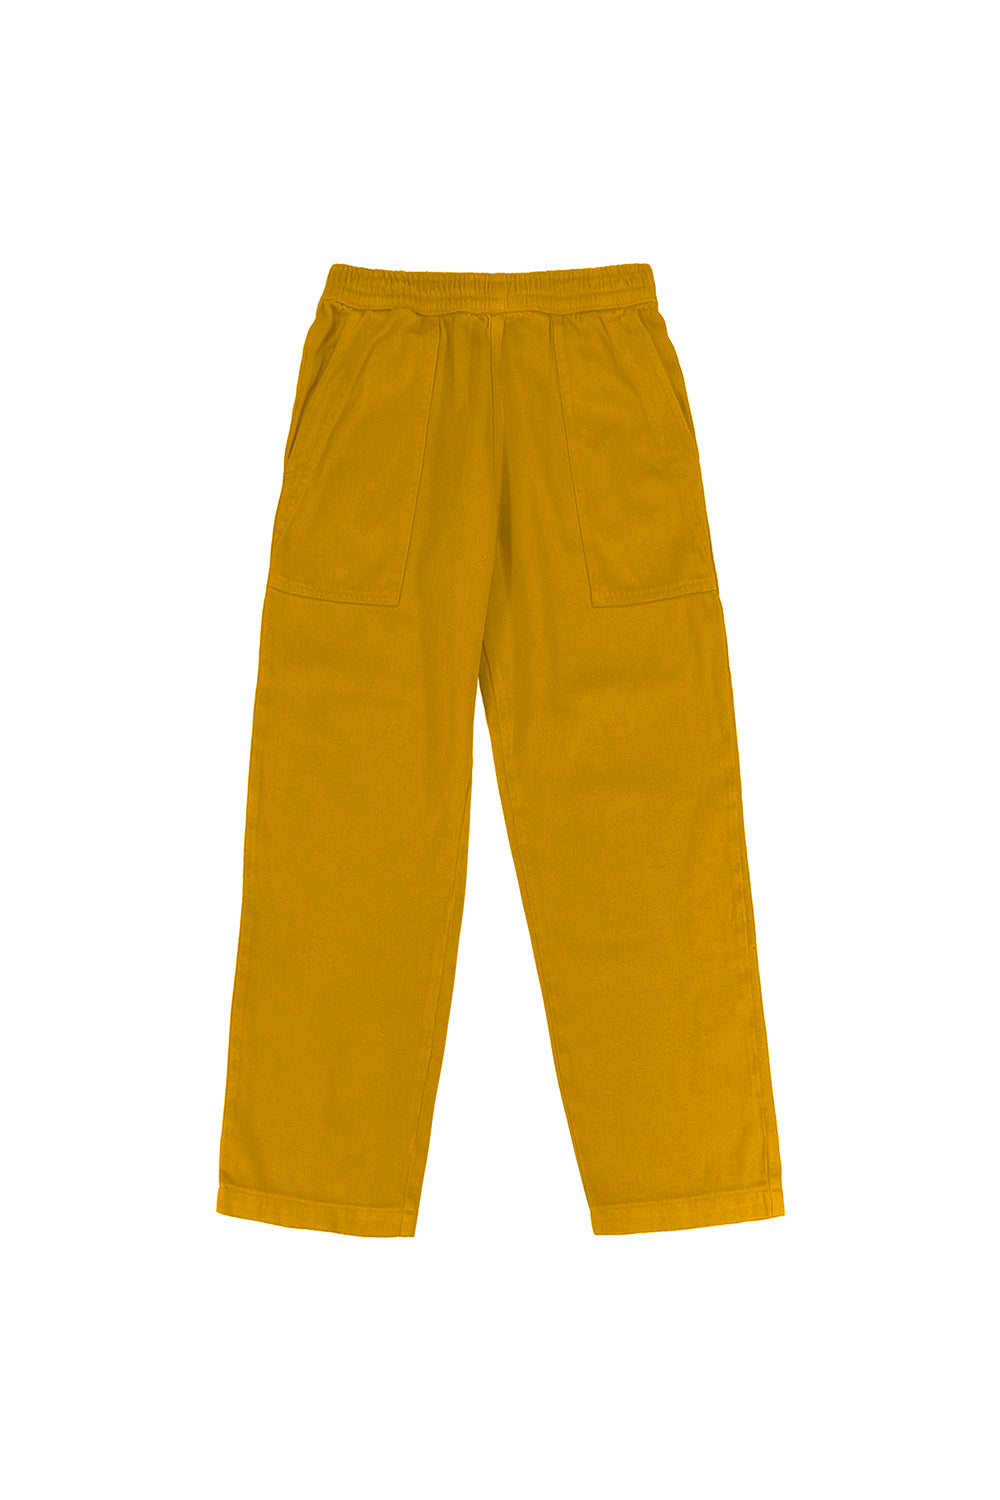 Ocean Pant | Jungmaven Hemp Clothing & Accessories / Color: Spicy Mustard